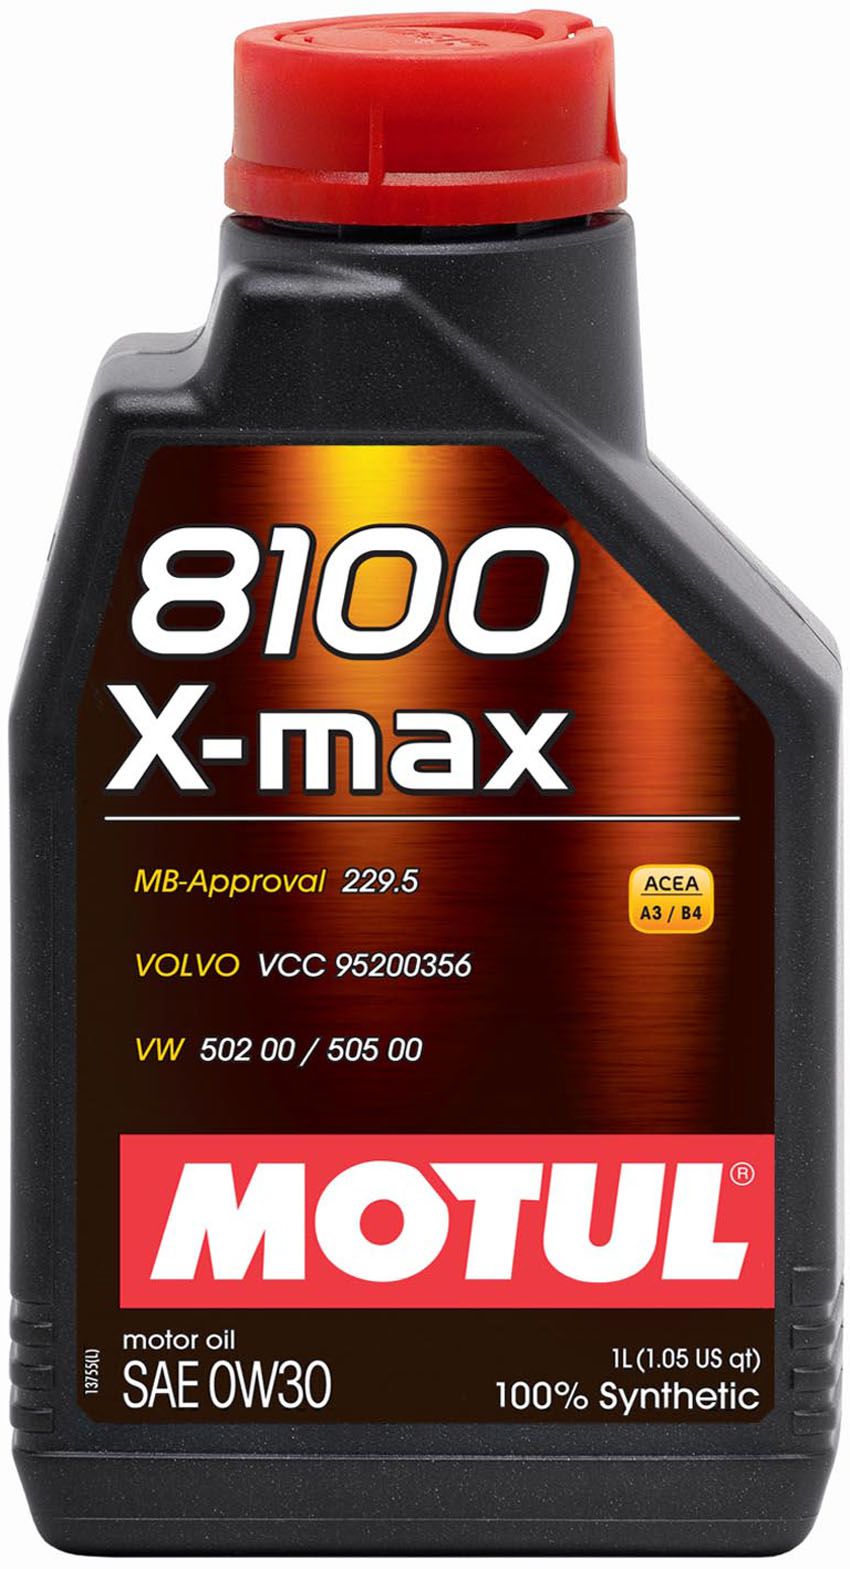 8100 X-max Motul